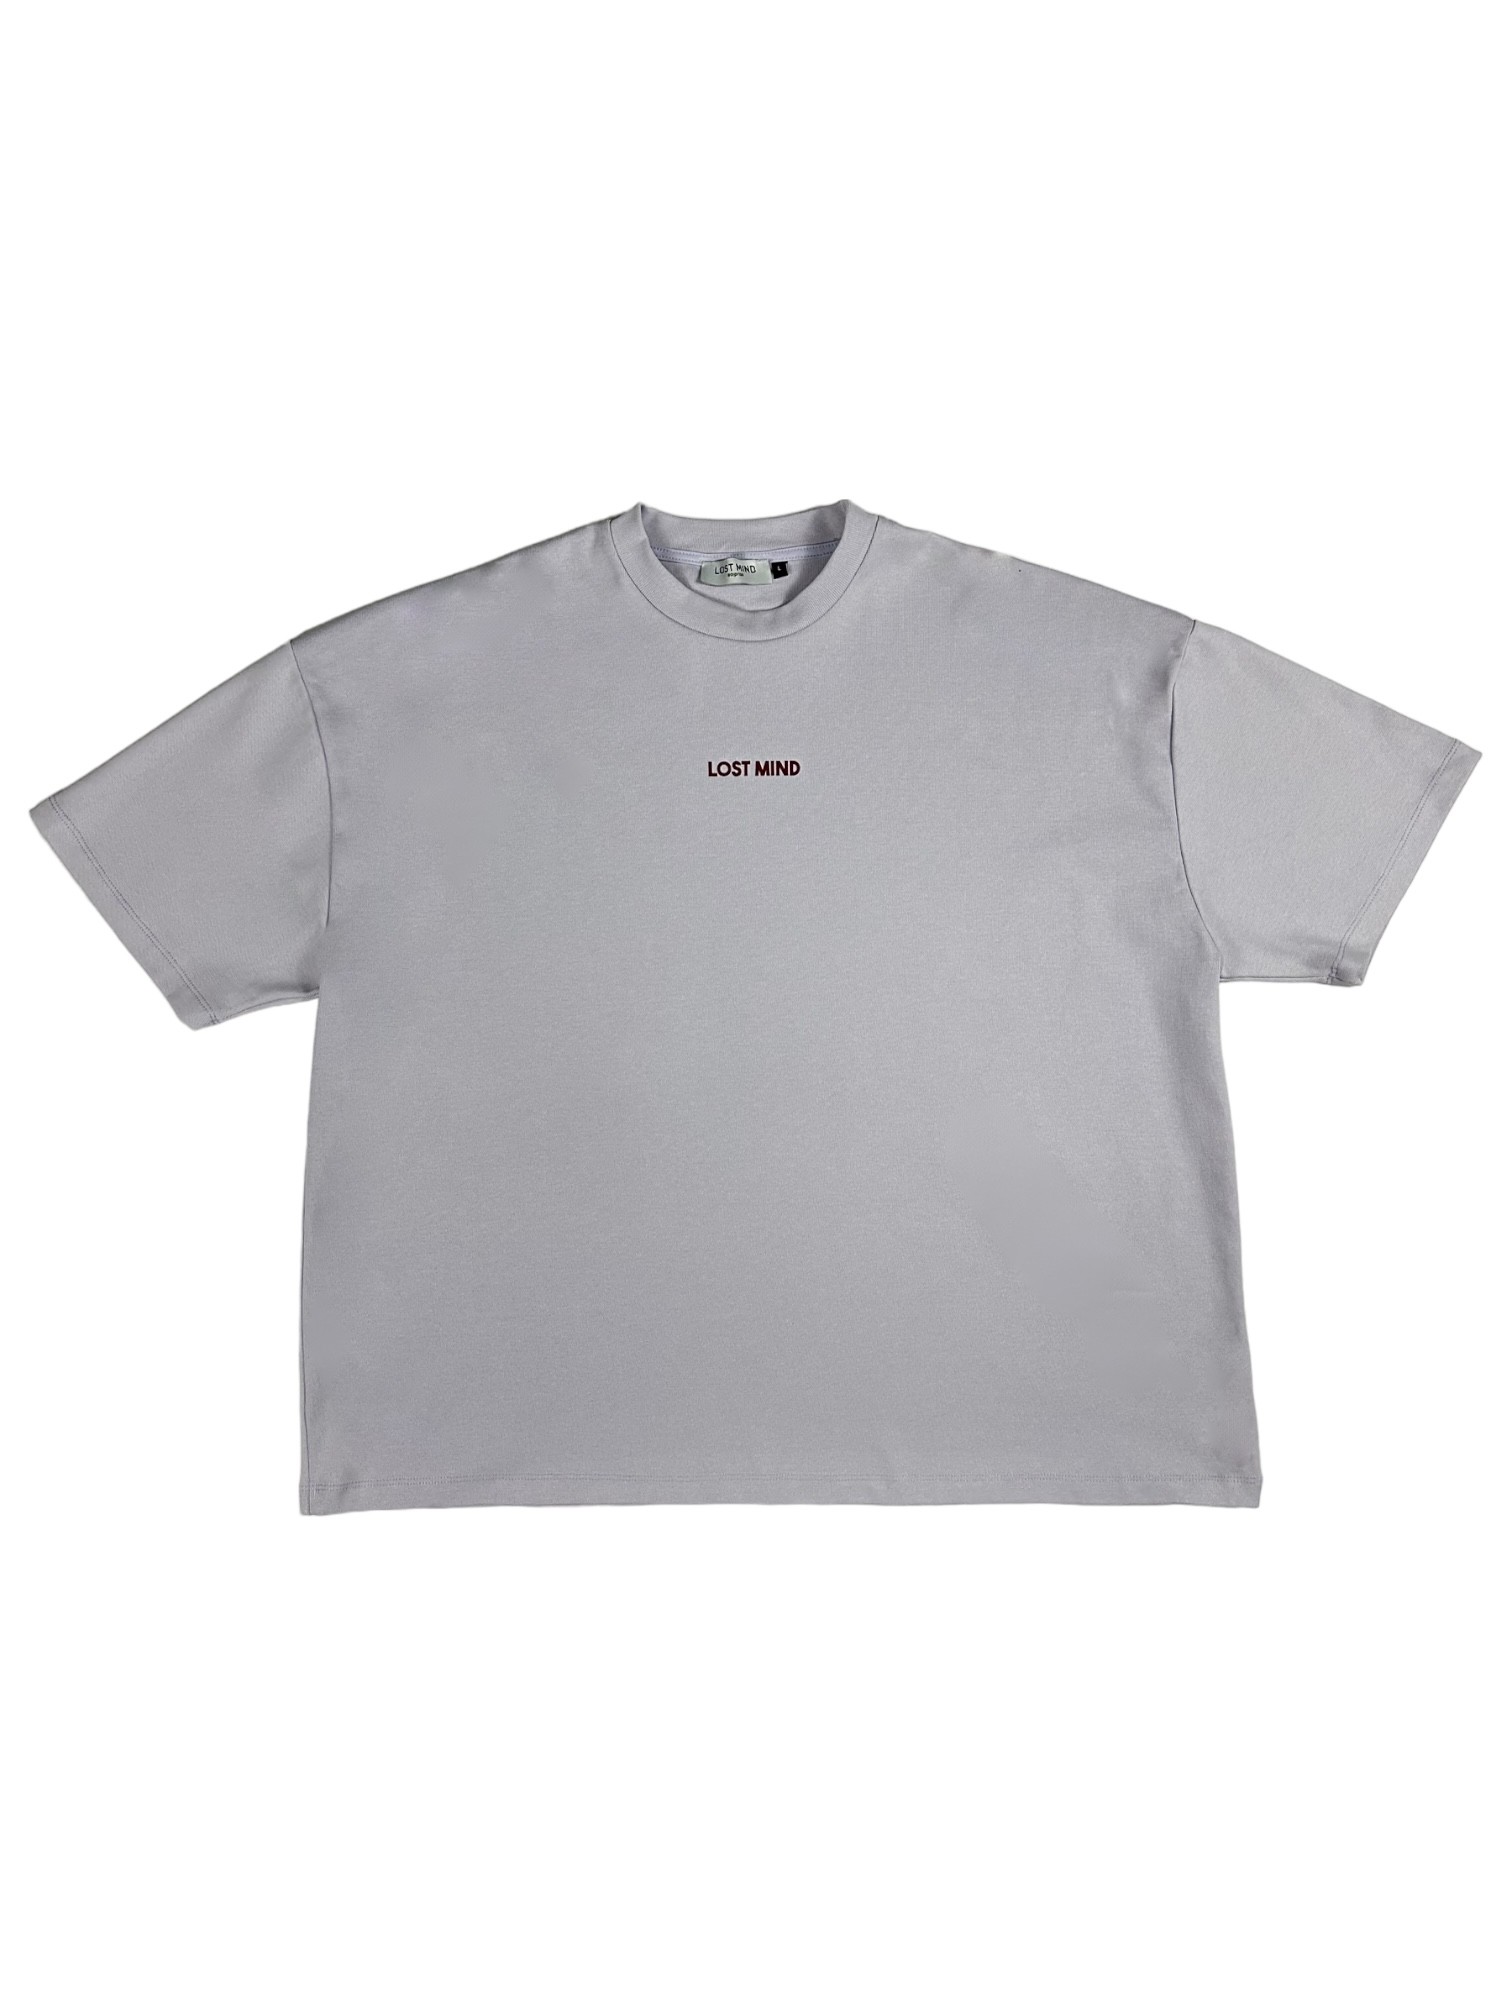 Cherry Day Oversize T Shirt (LMT83)